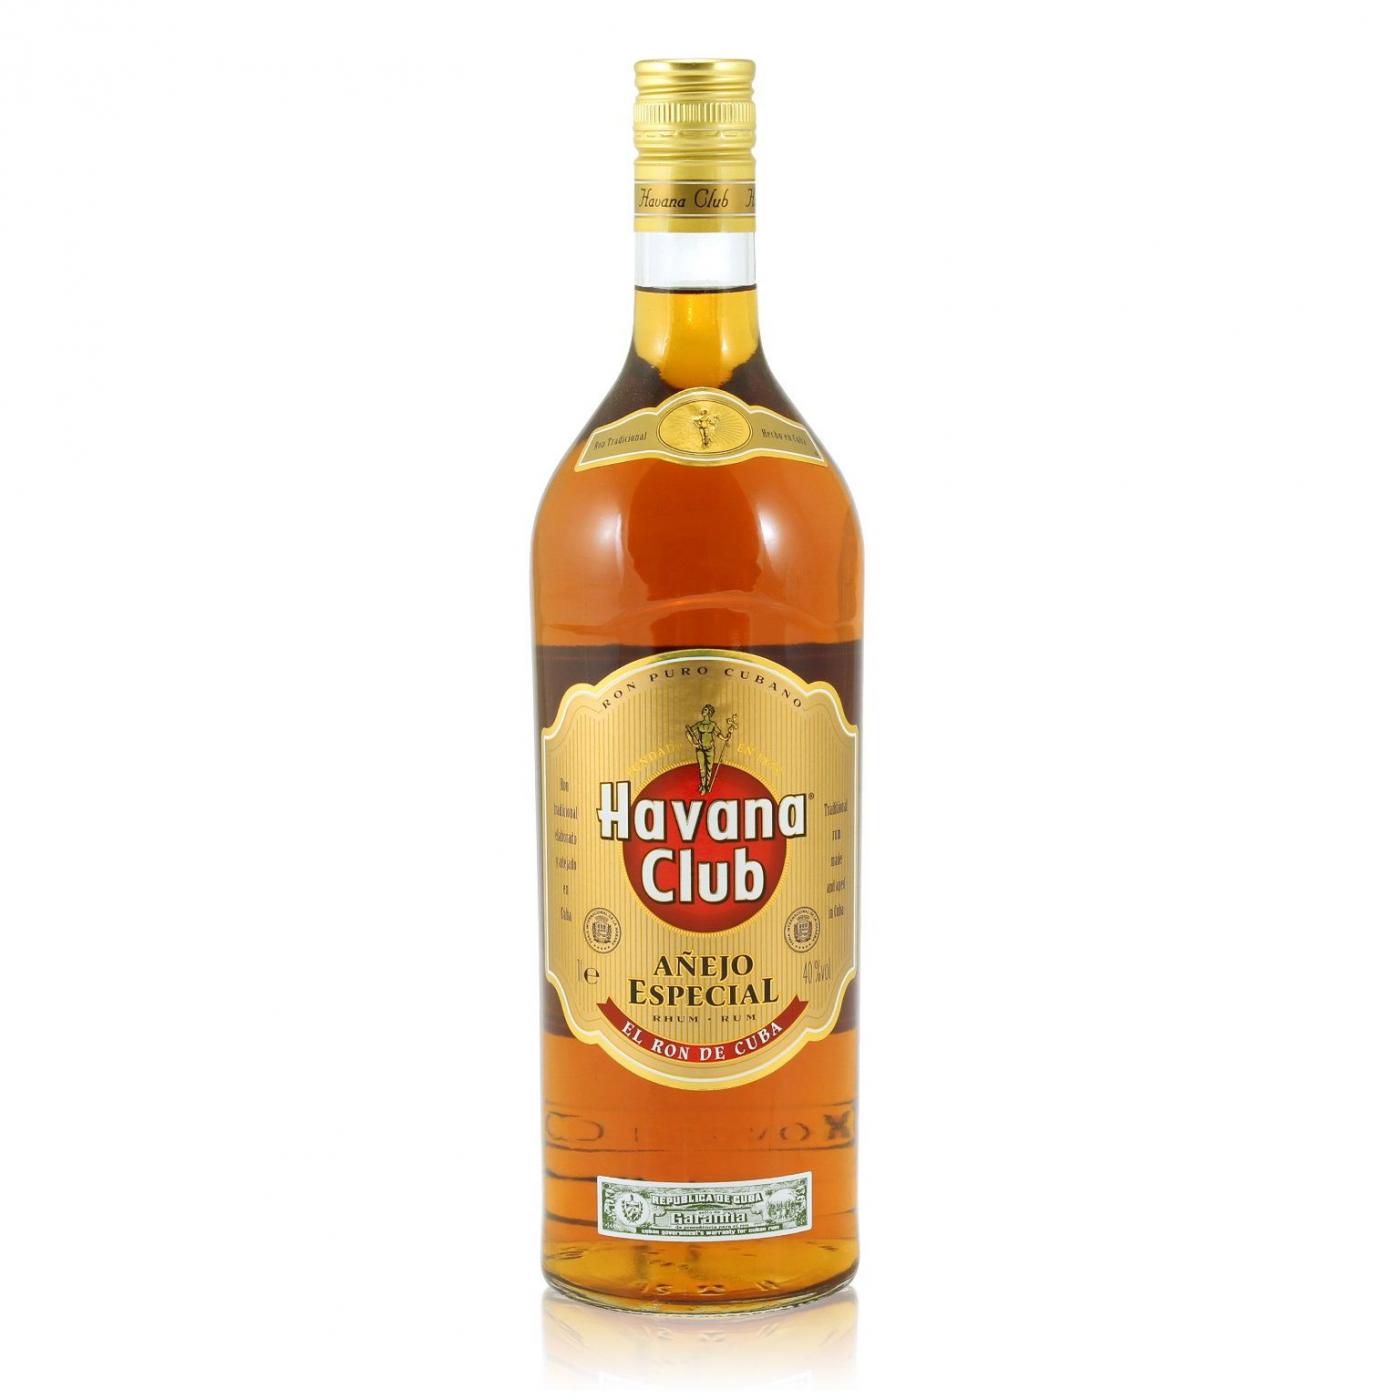 Havana Club Añejo Especial 5 yrs (1.00L)